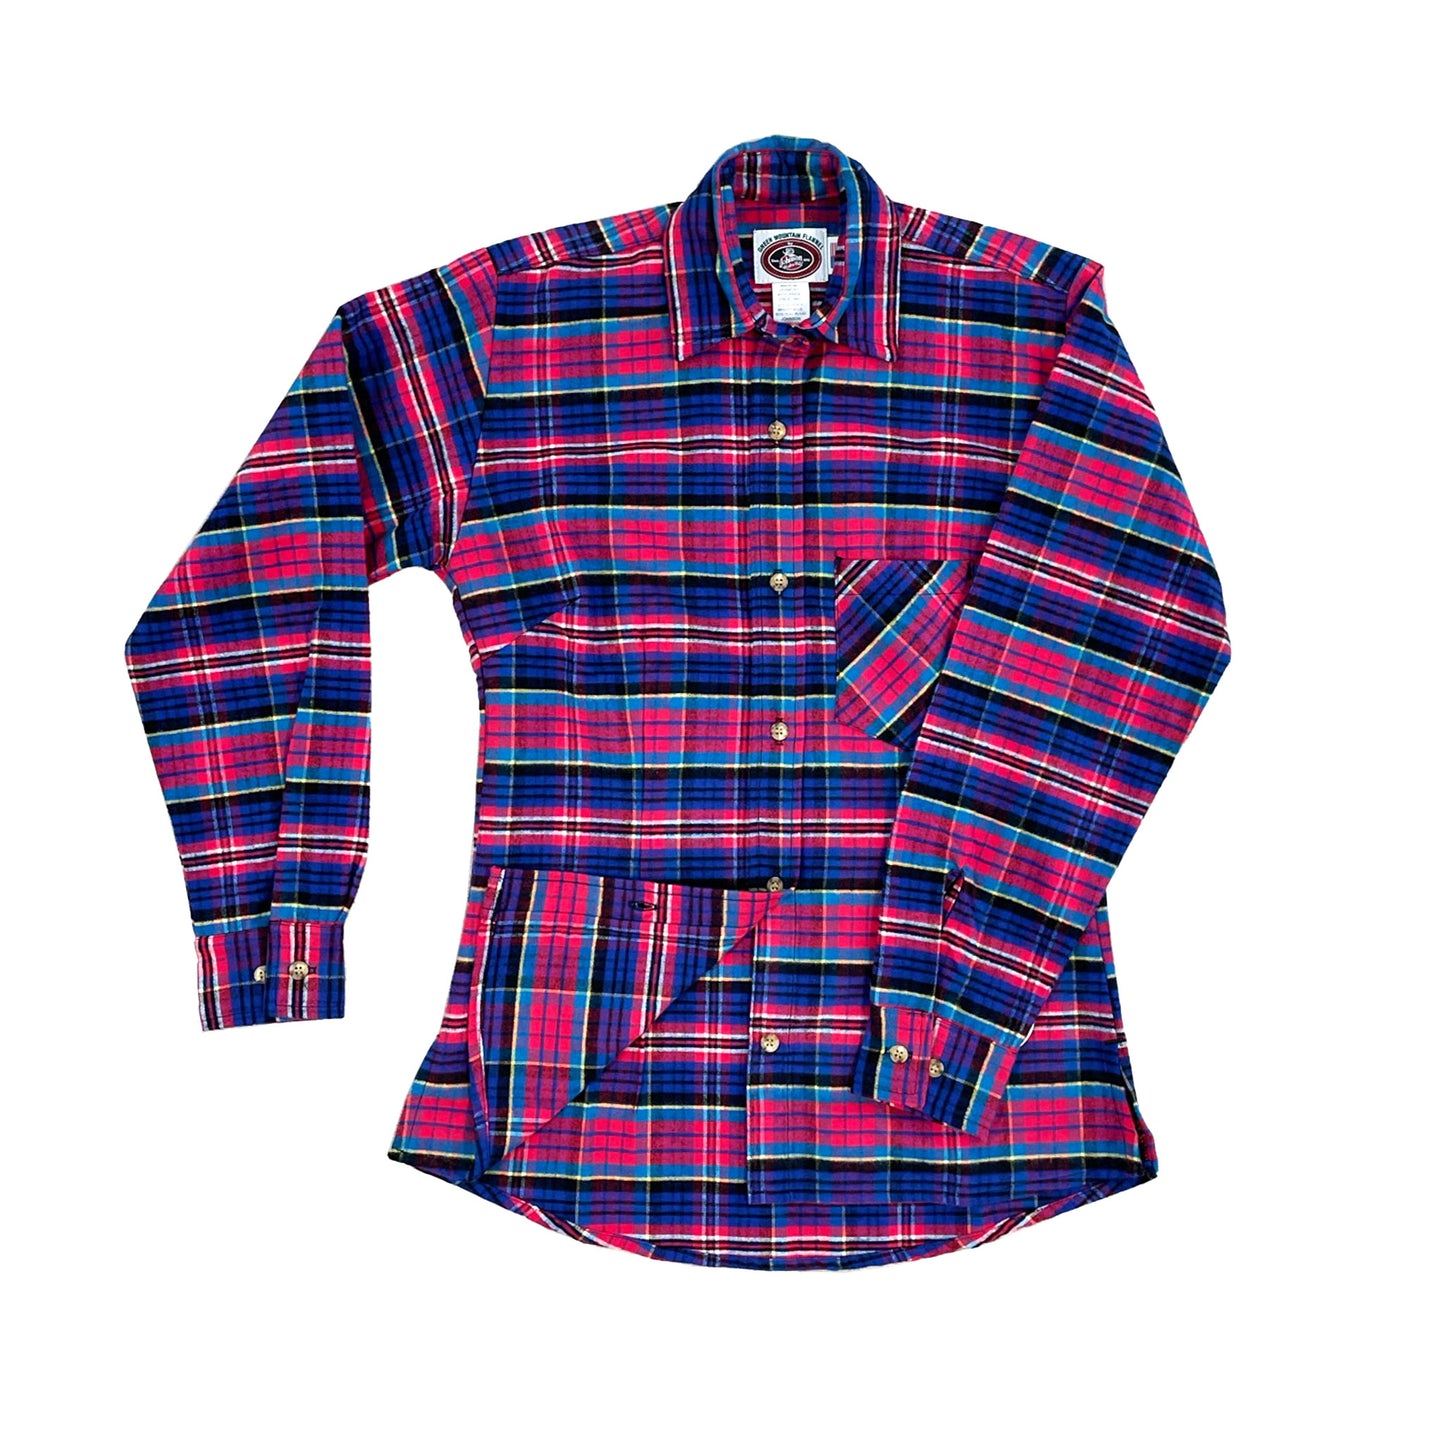 Women's flannel purple, pink, blue, white and black plaid button down shirt